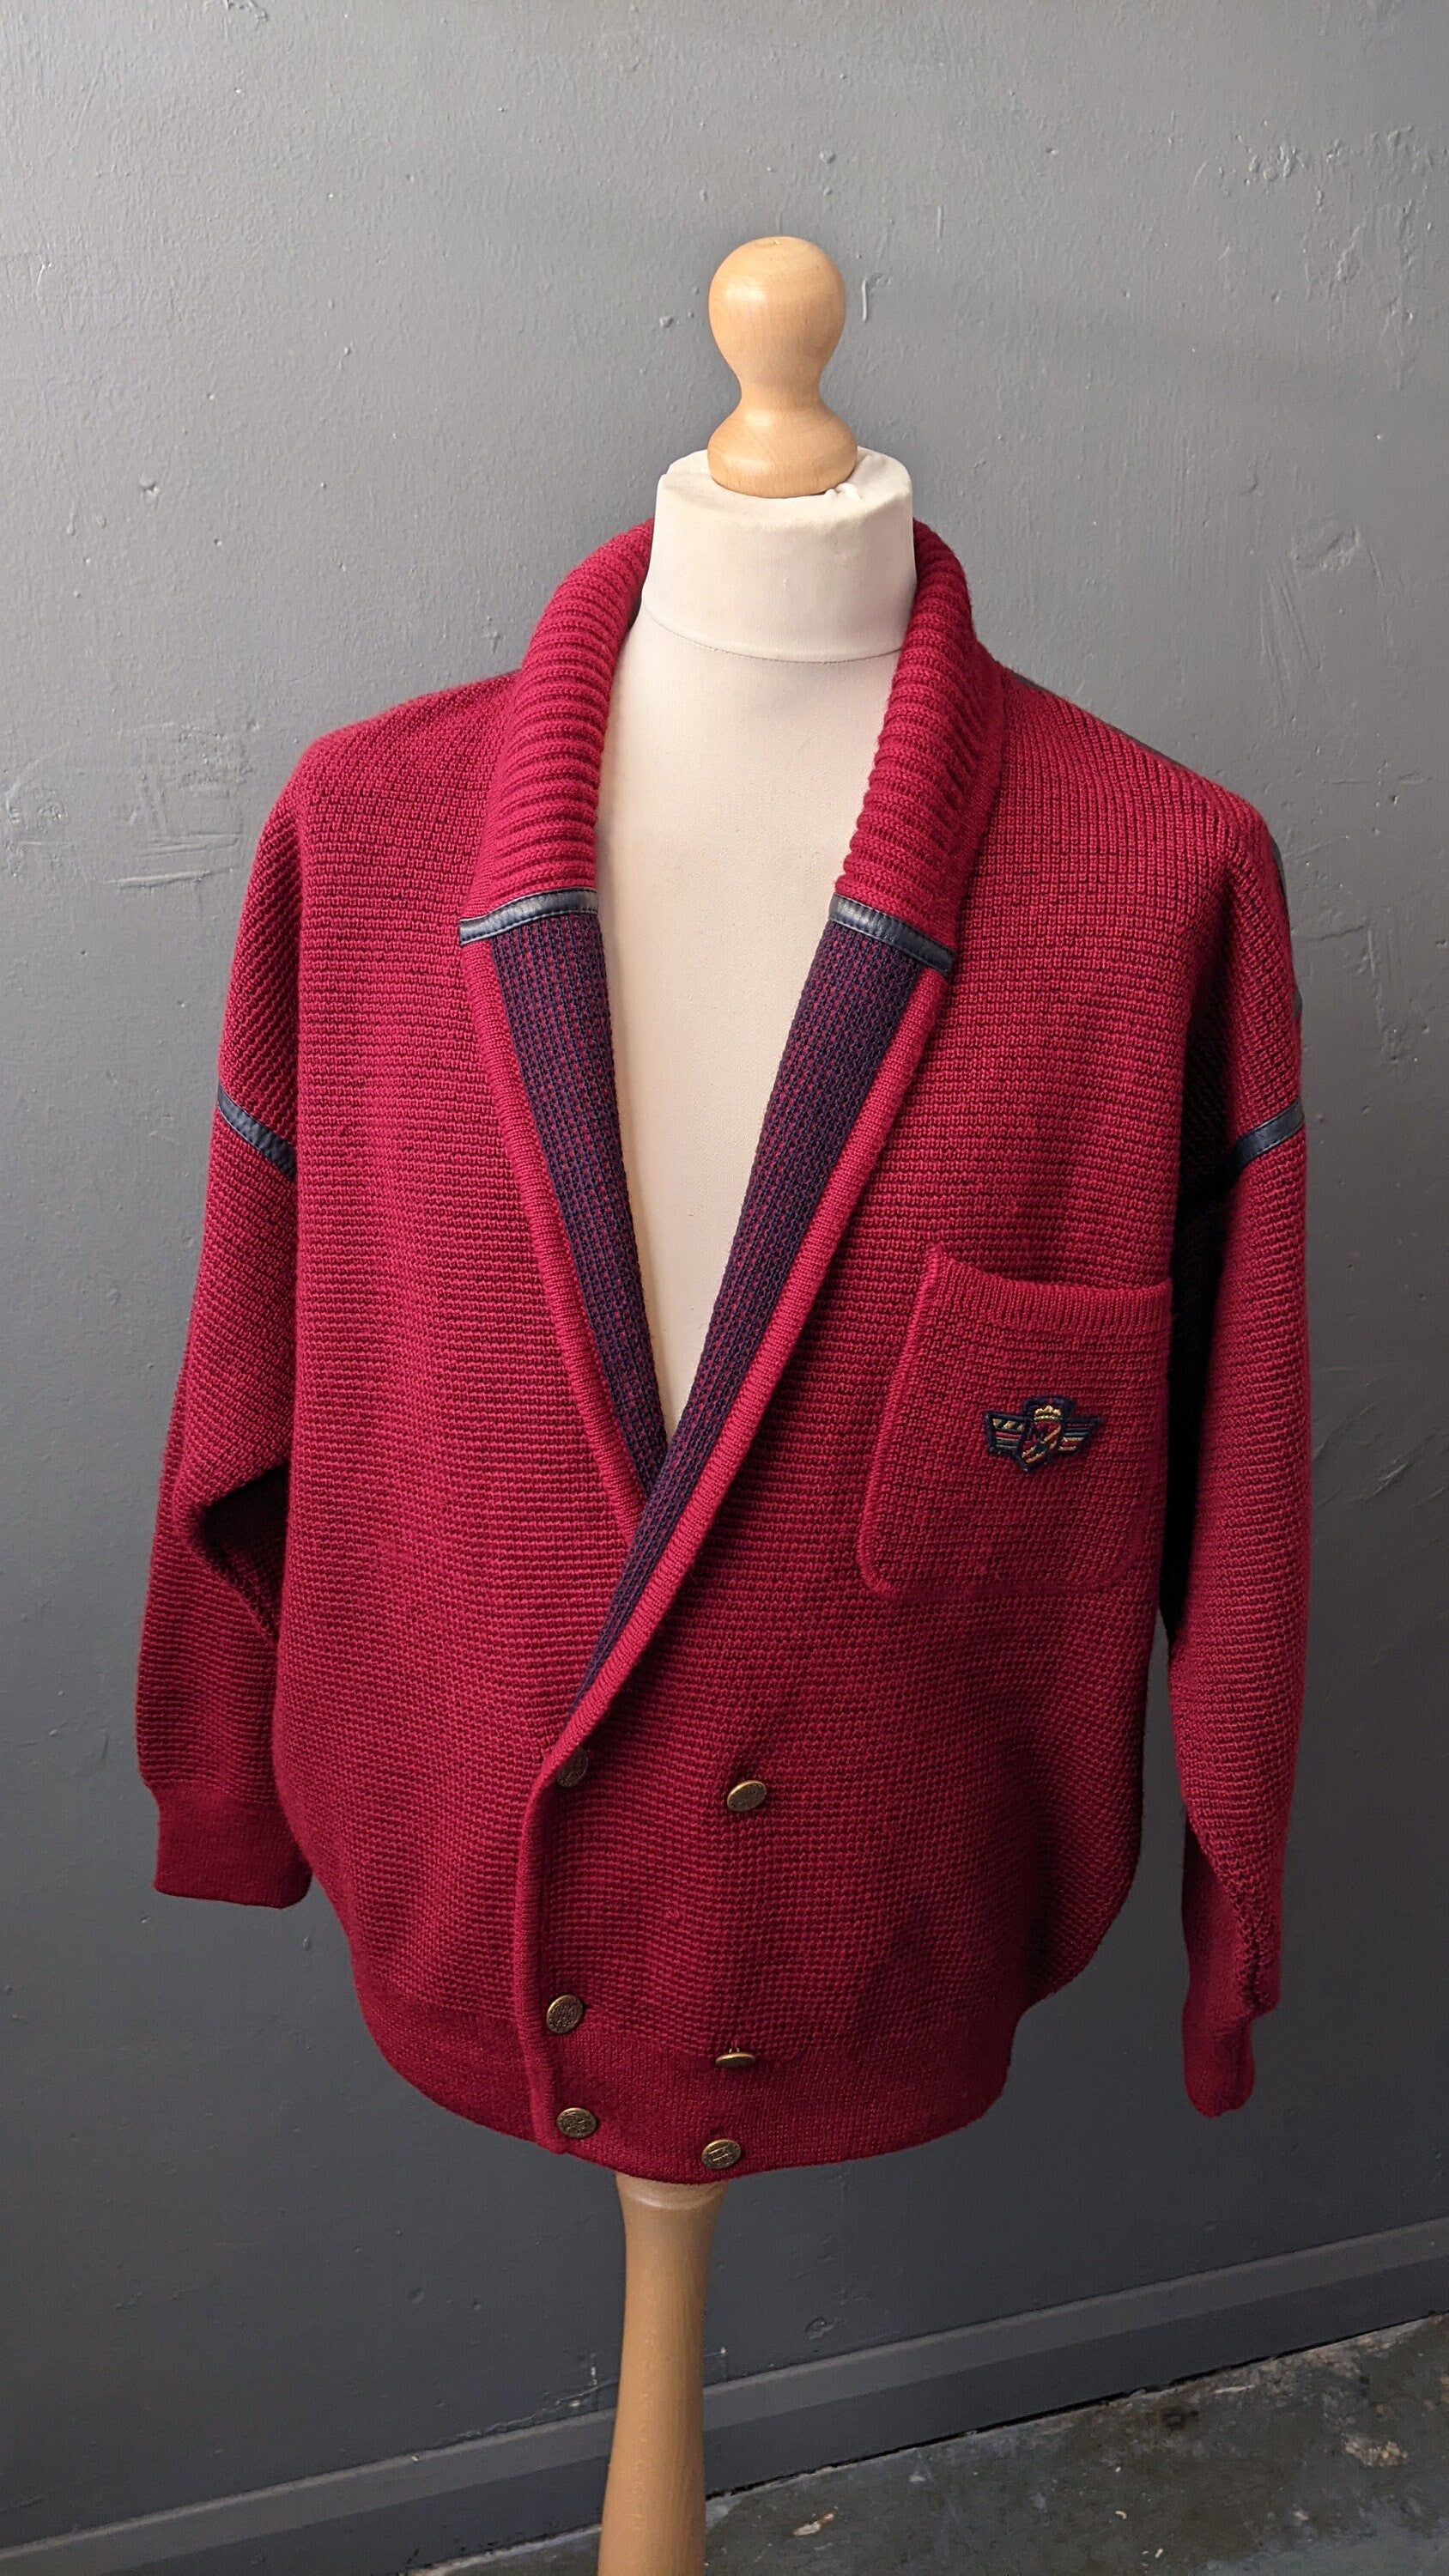 80s Burgundy Shawl Collar Wool Cardigan by Marz Munchen, Size Large